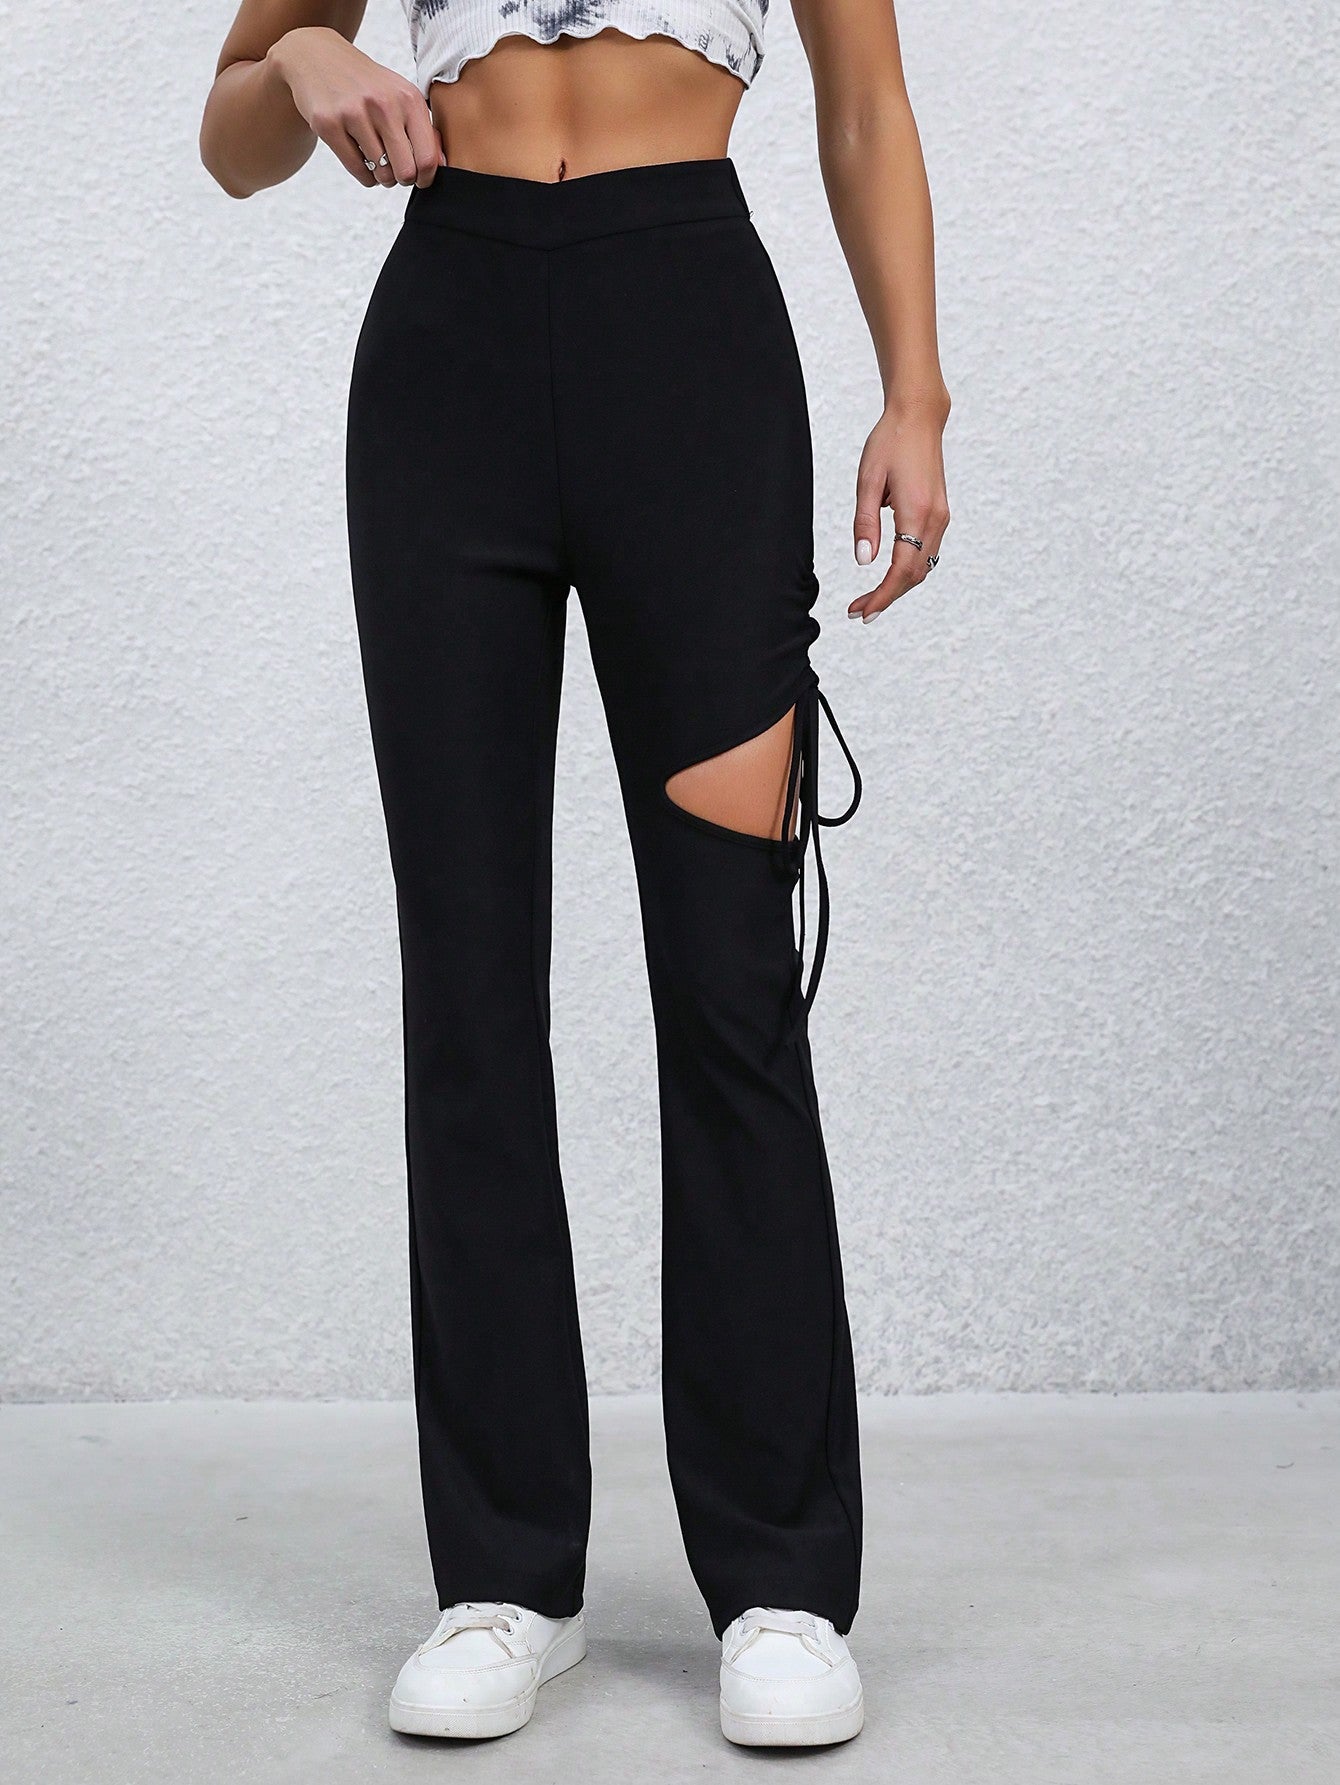 womens fashion pants – NextthinkShop